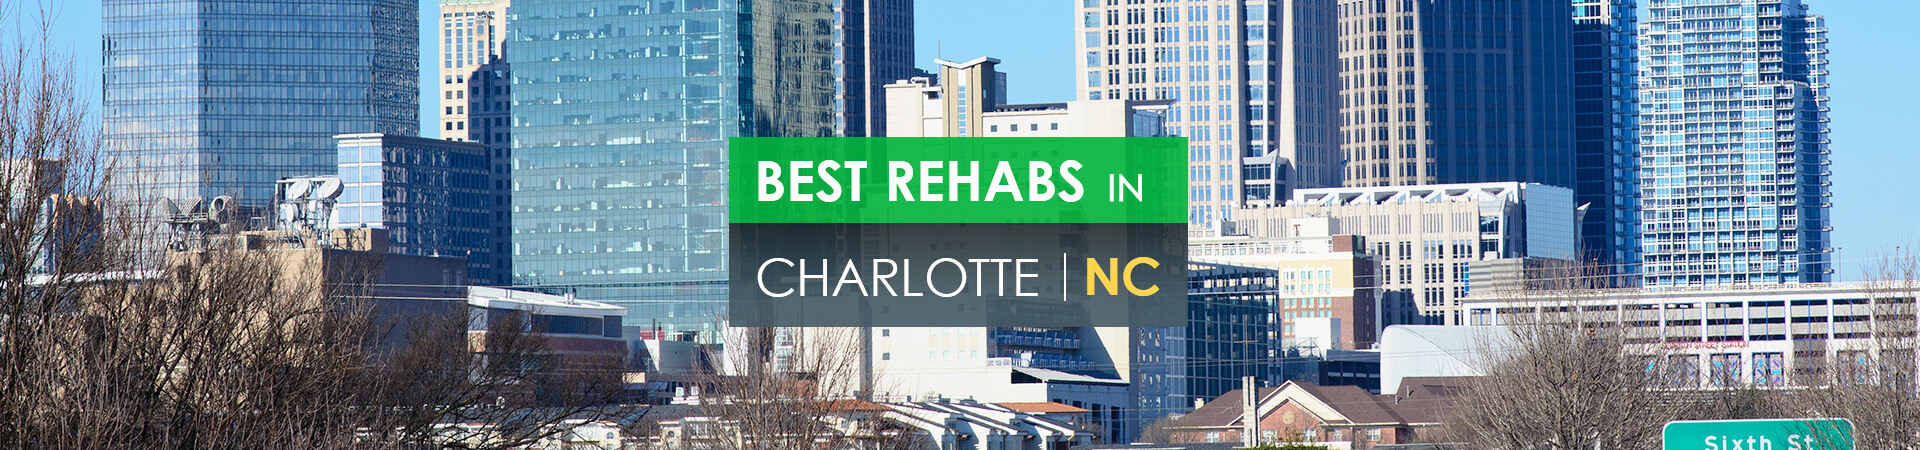 Best rehabs in Charlotte, NC